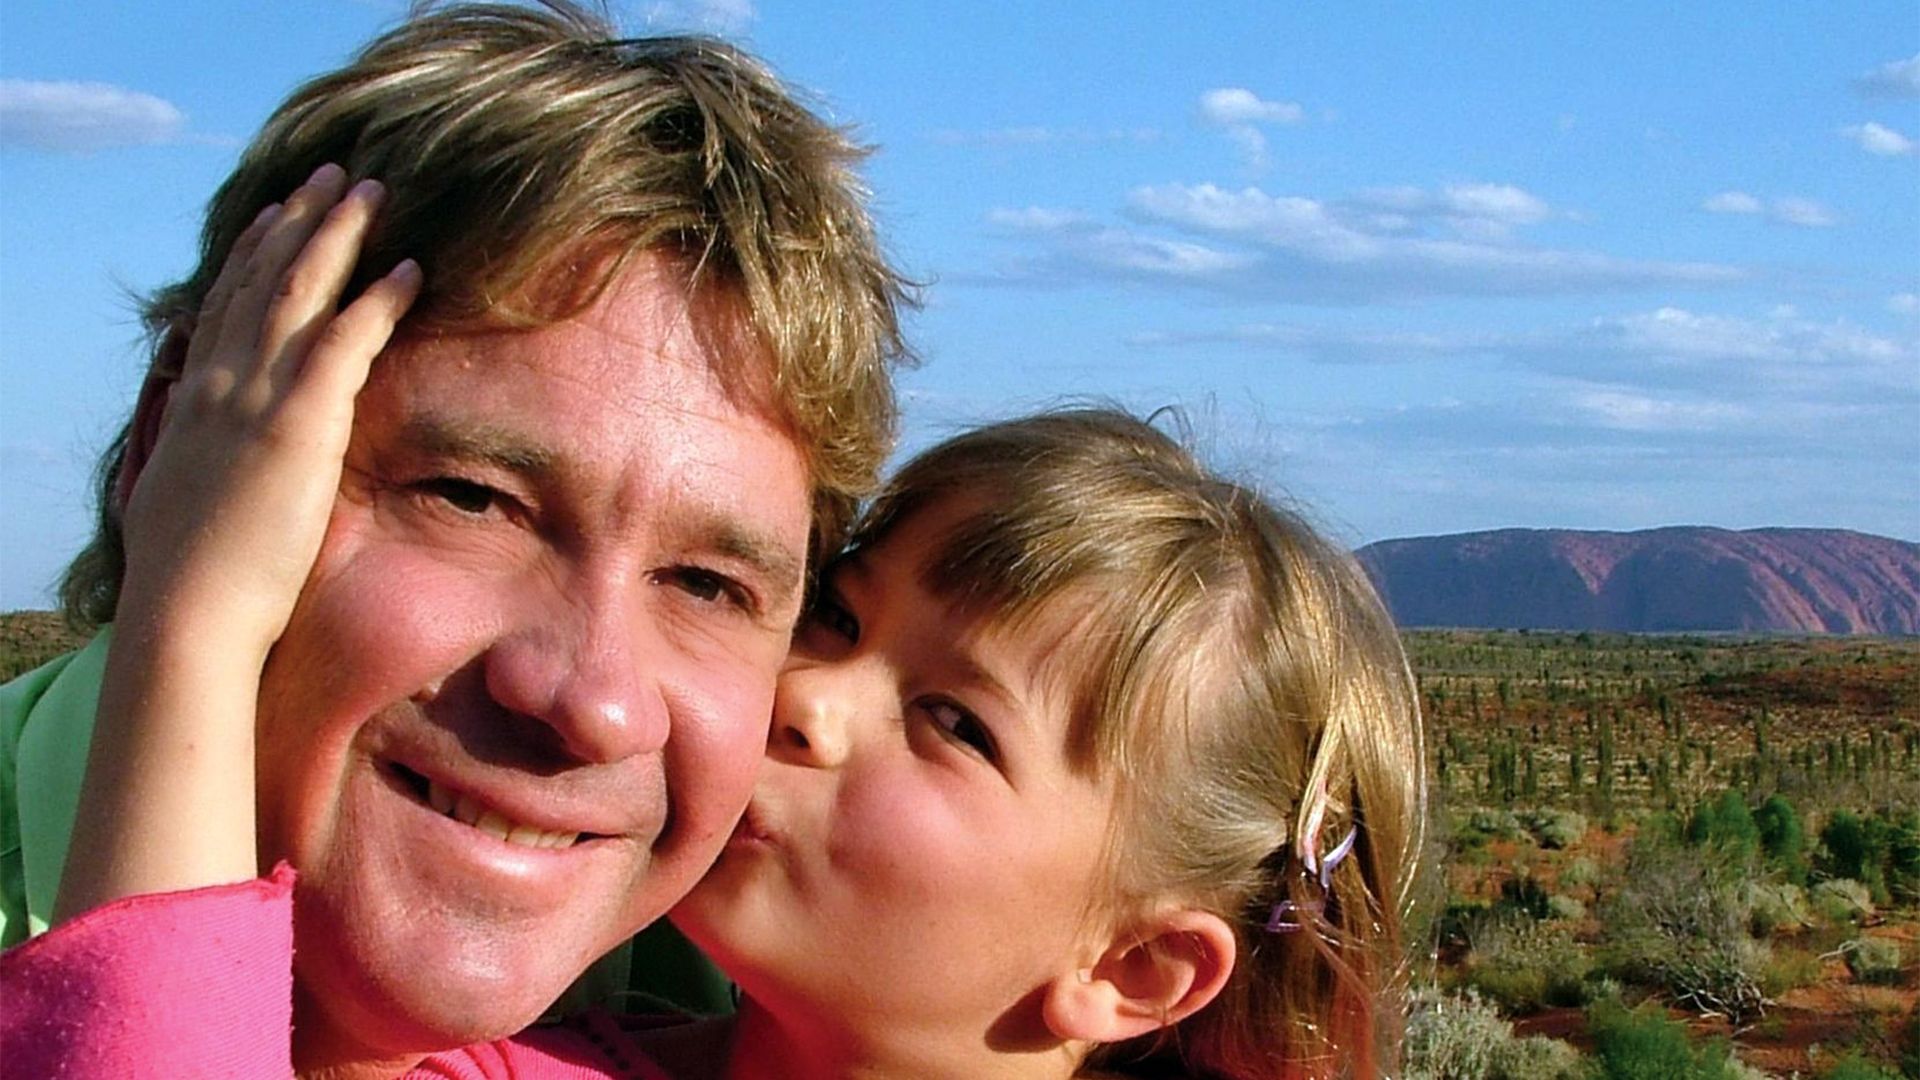 Young Bindi Irwin kisses her dad Steve Irwin's cheek as they enjoy the sunshine